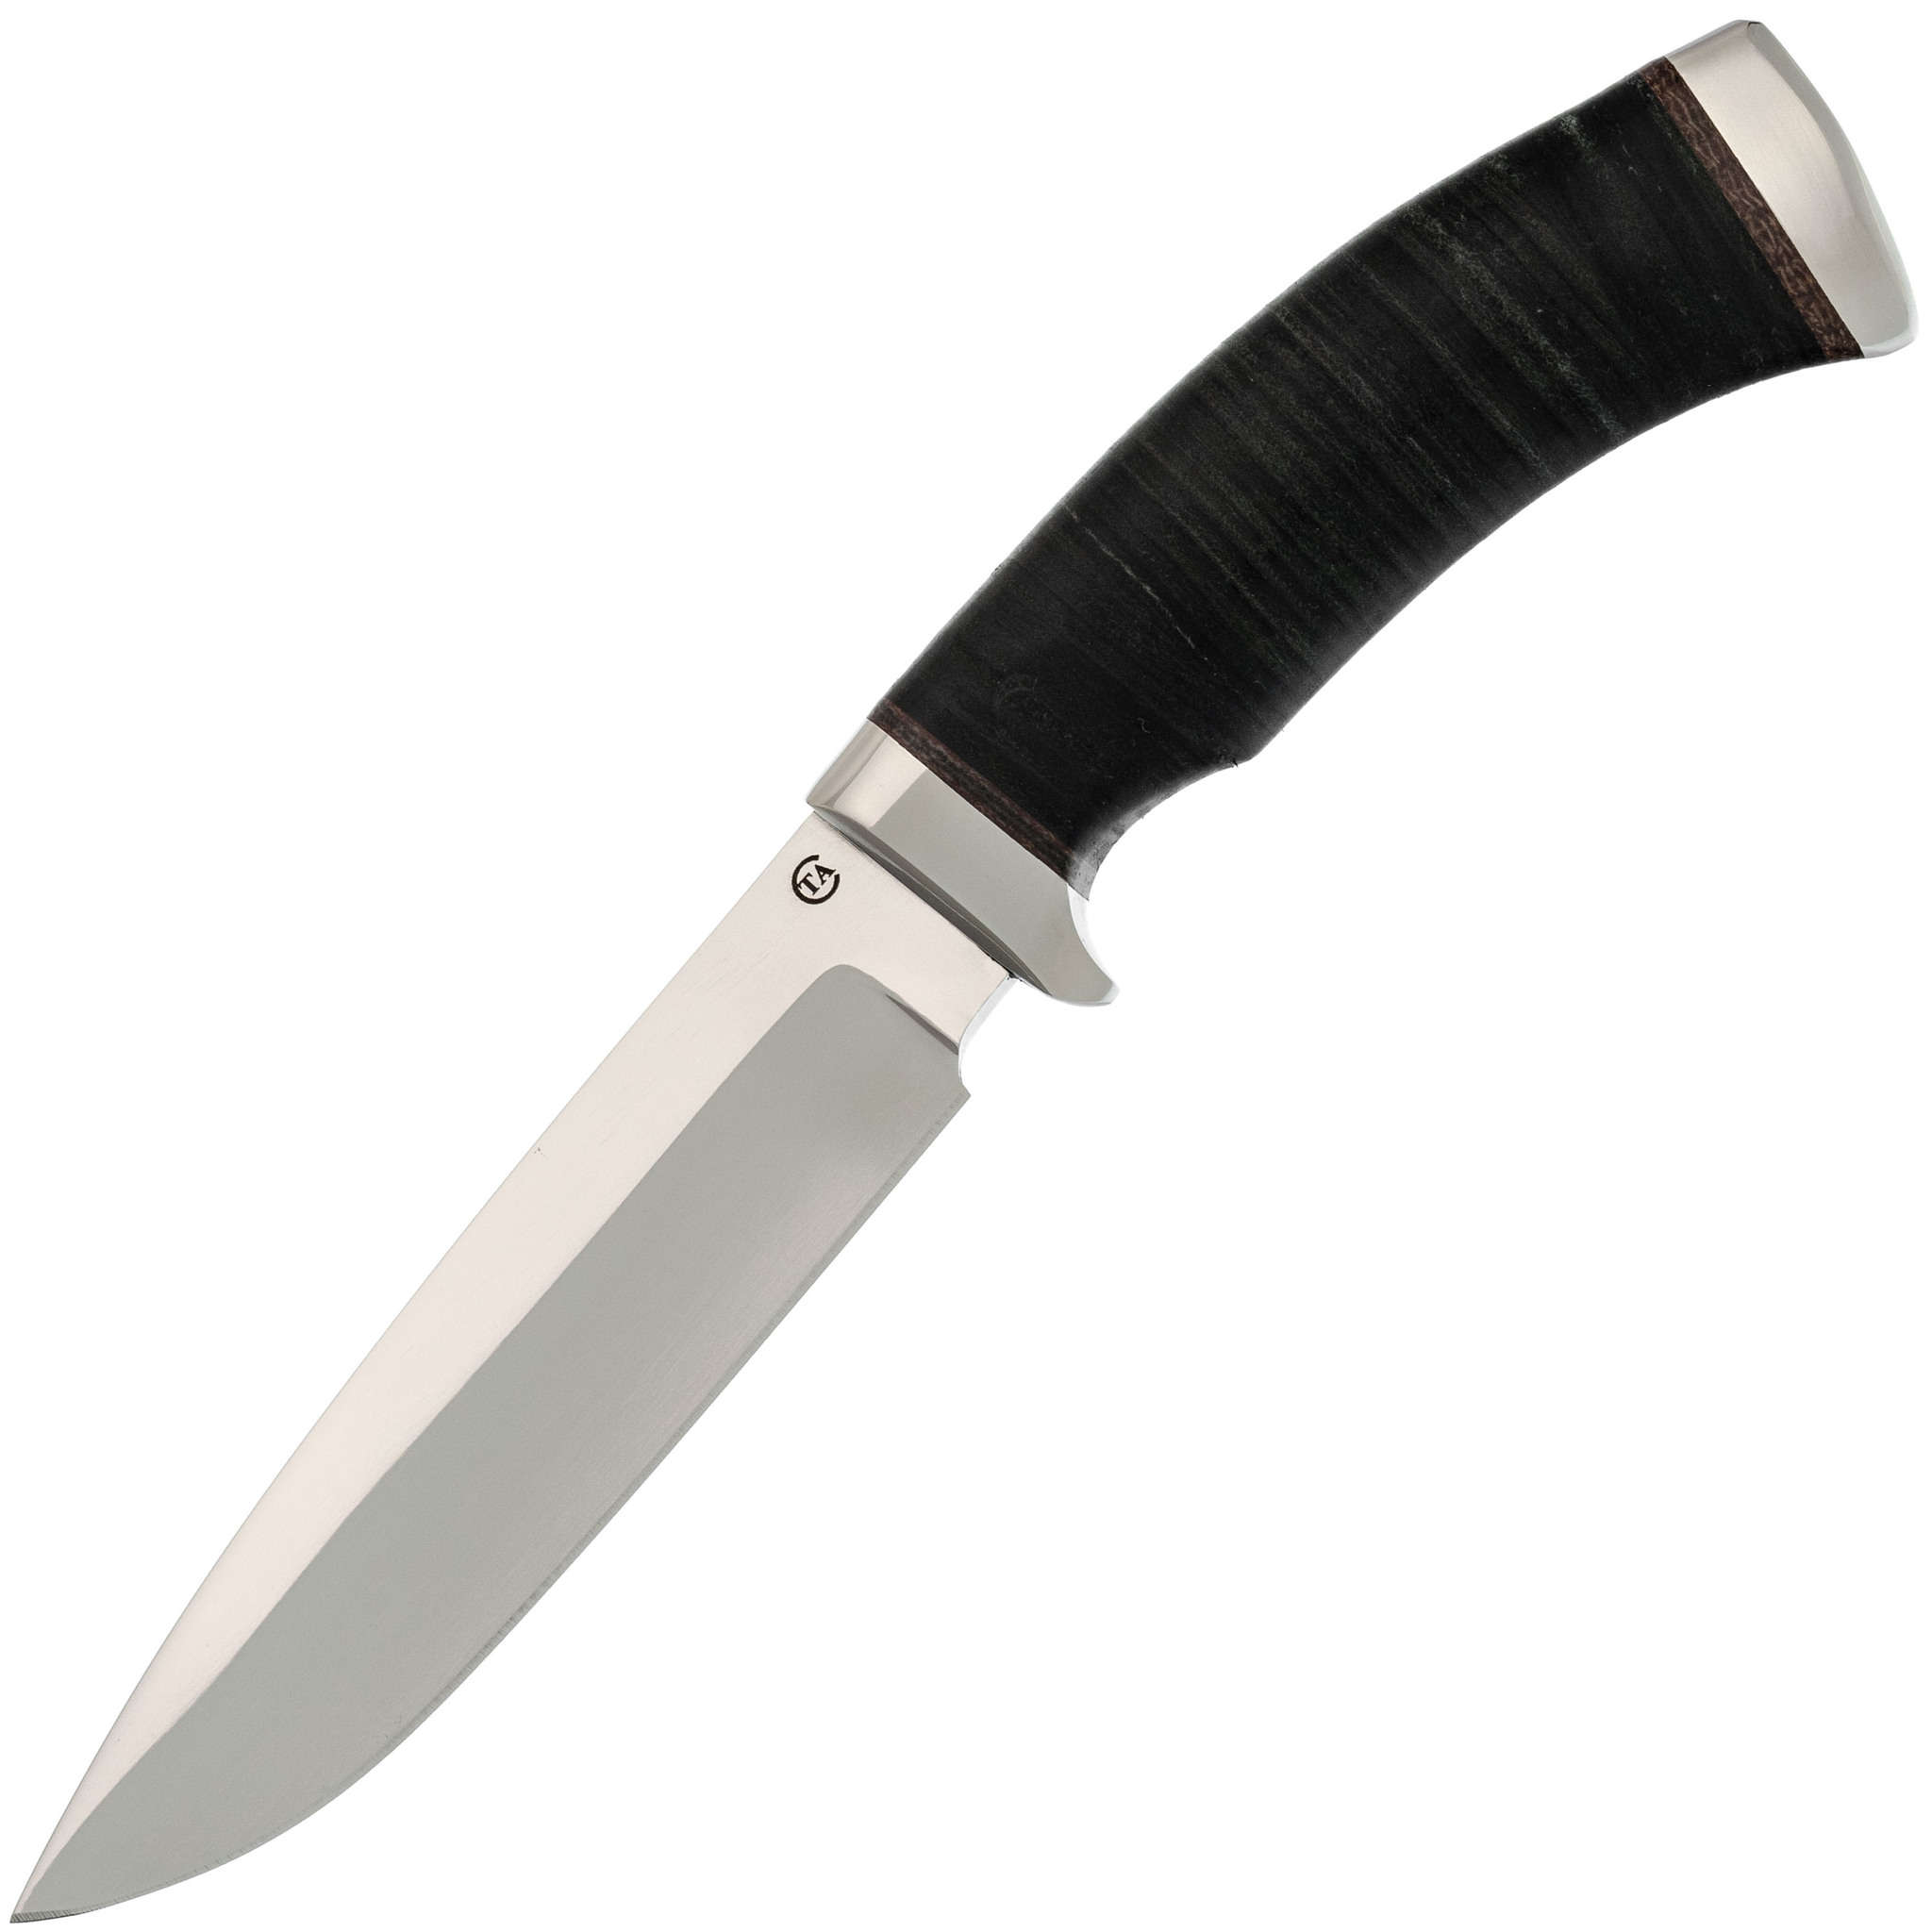 Нож Кубанец, сталь 95х18, кожа